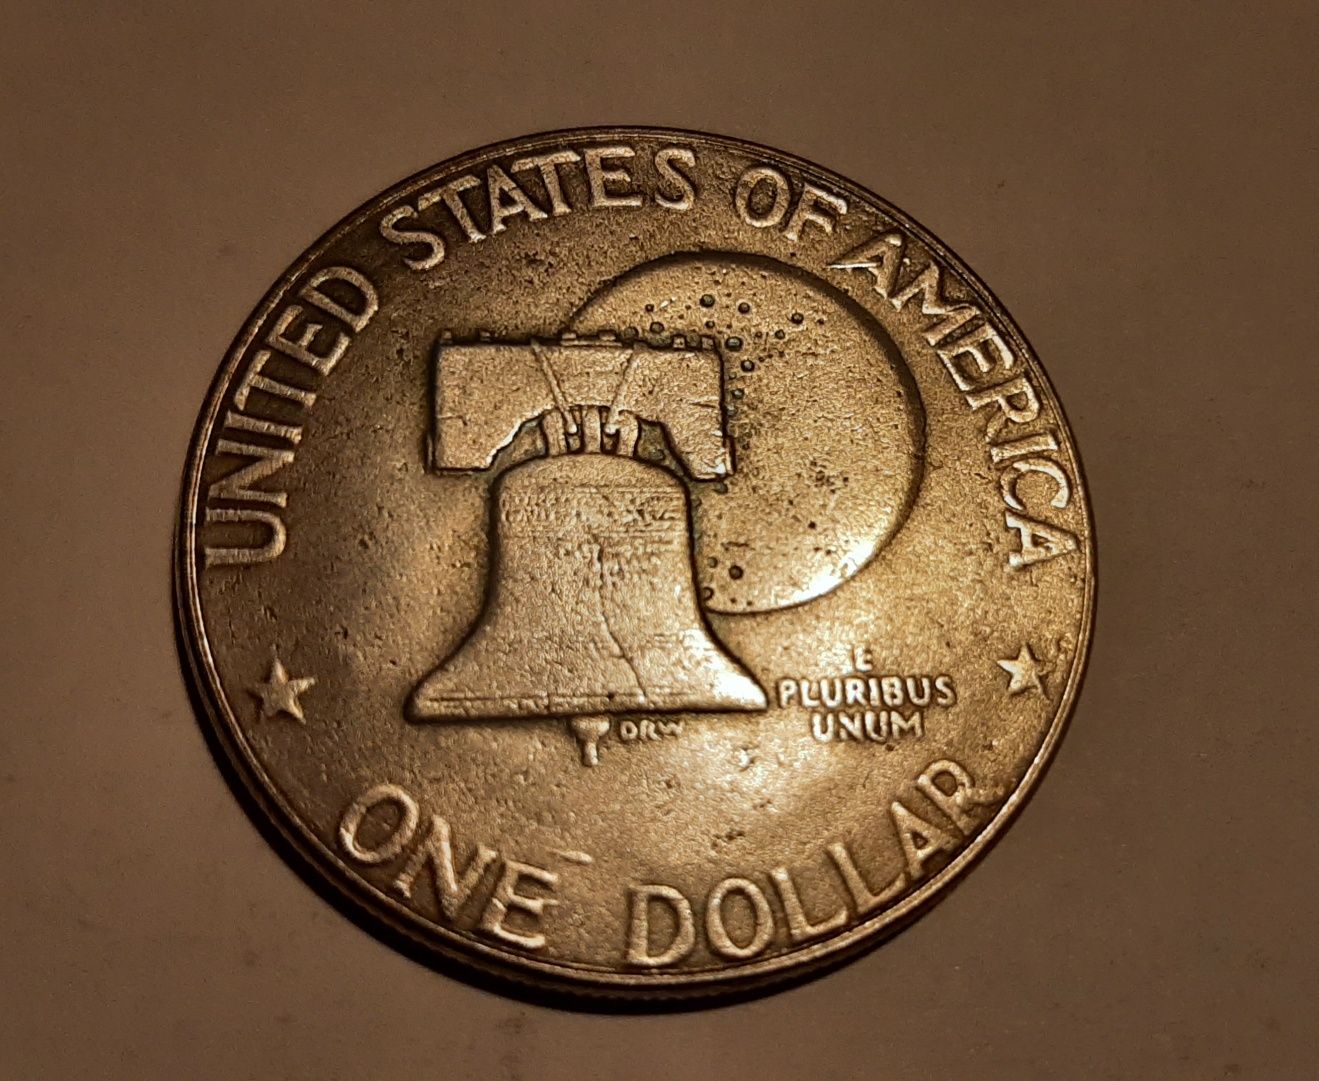 Moneta 1 dolar 1976- Eisenhower Dollar

Stan techniczny: sprawny

Sta